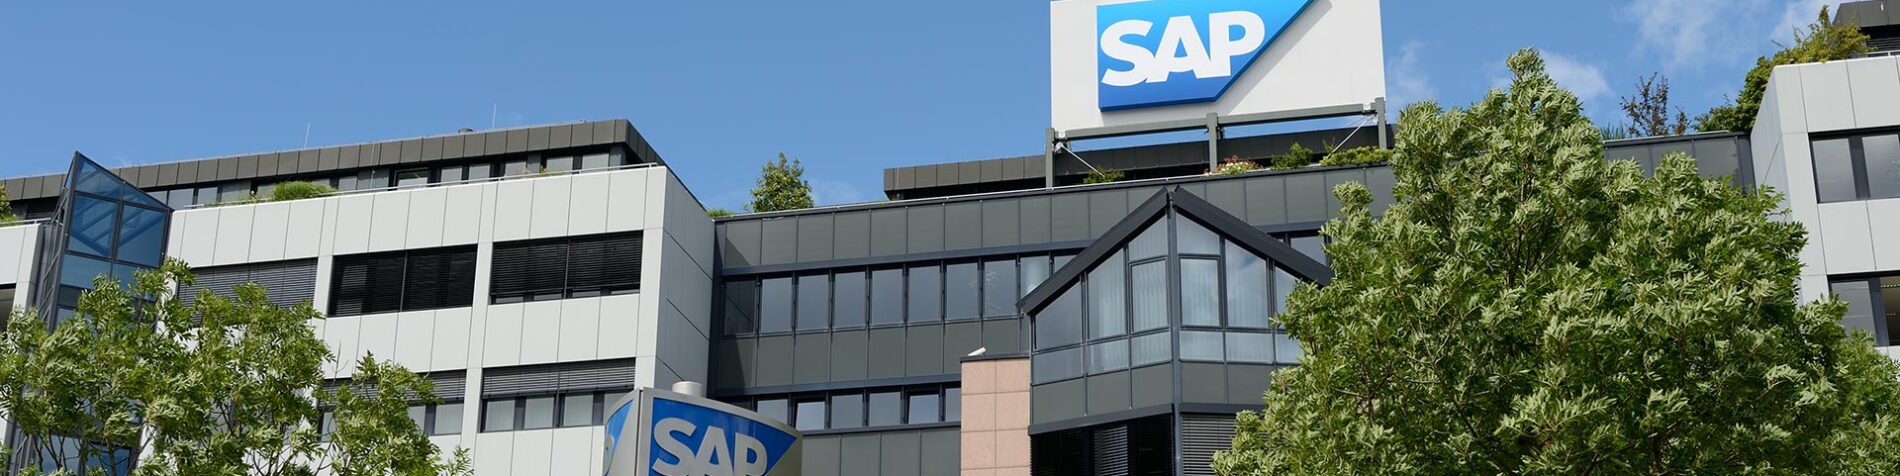 SAP to Release Third Quarter 2021 Results